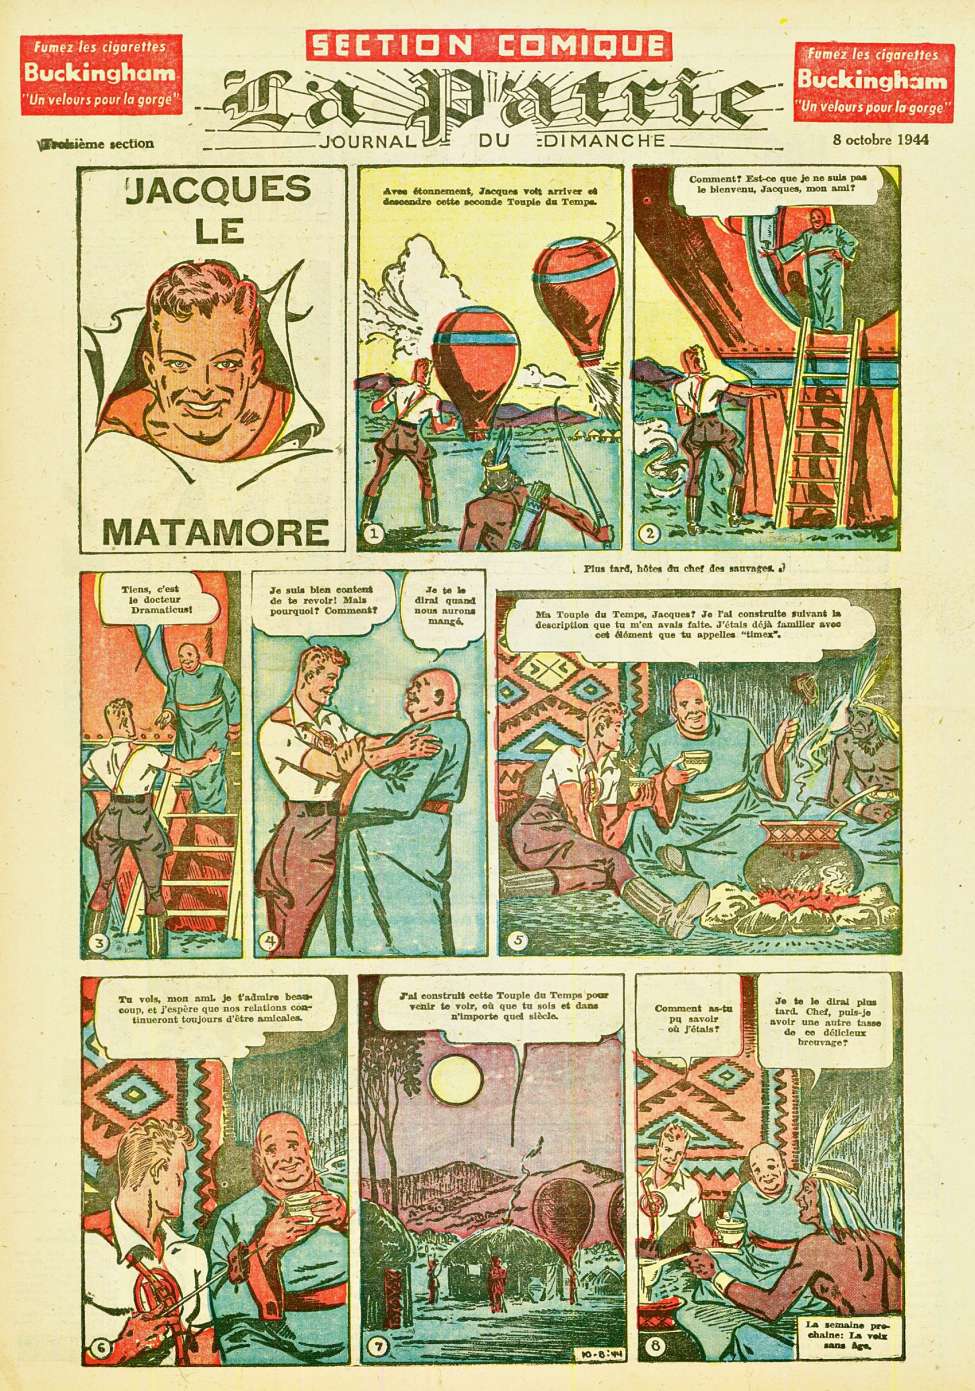 Comic Book Cover For La Patrie - Section Comique (1944-10-08)